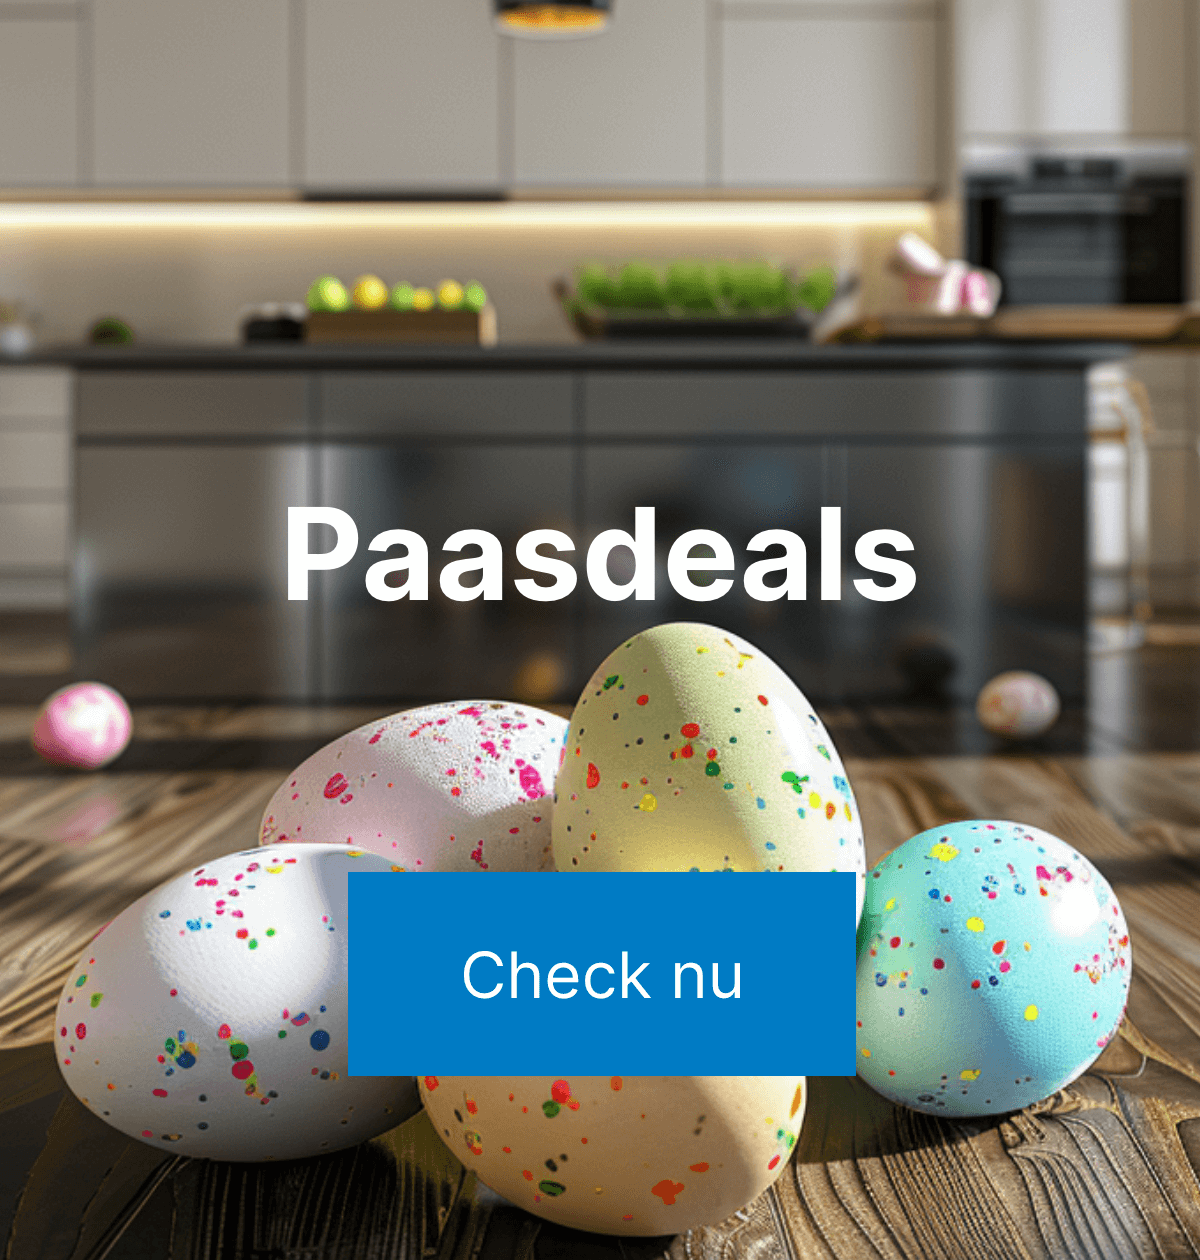 Paas deals